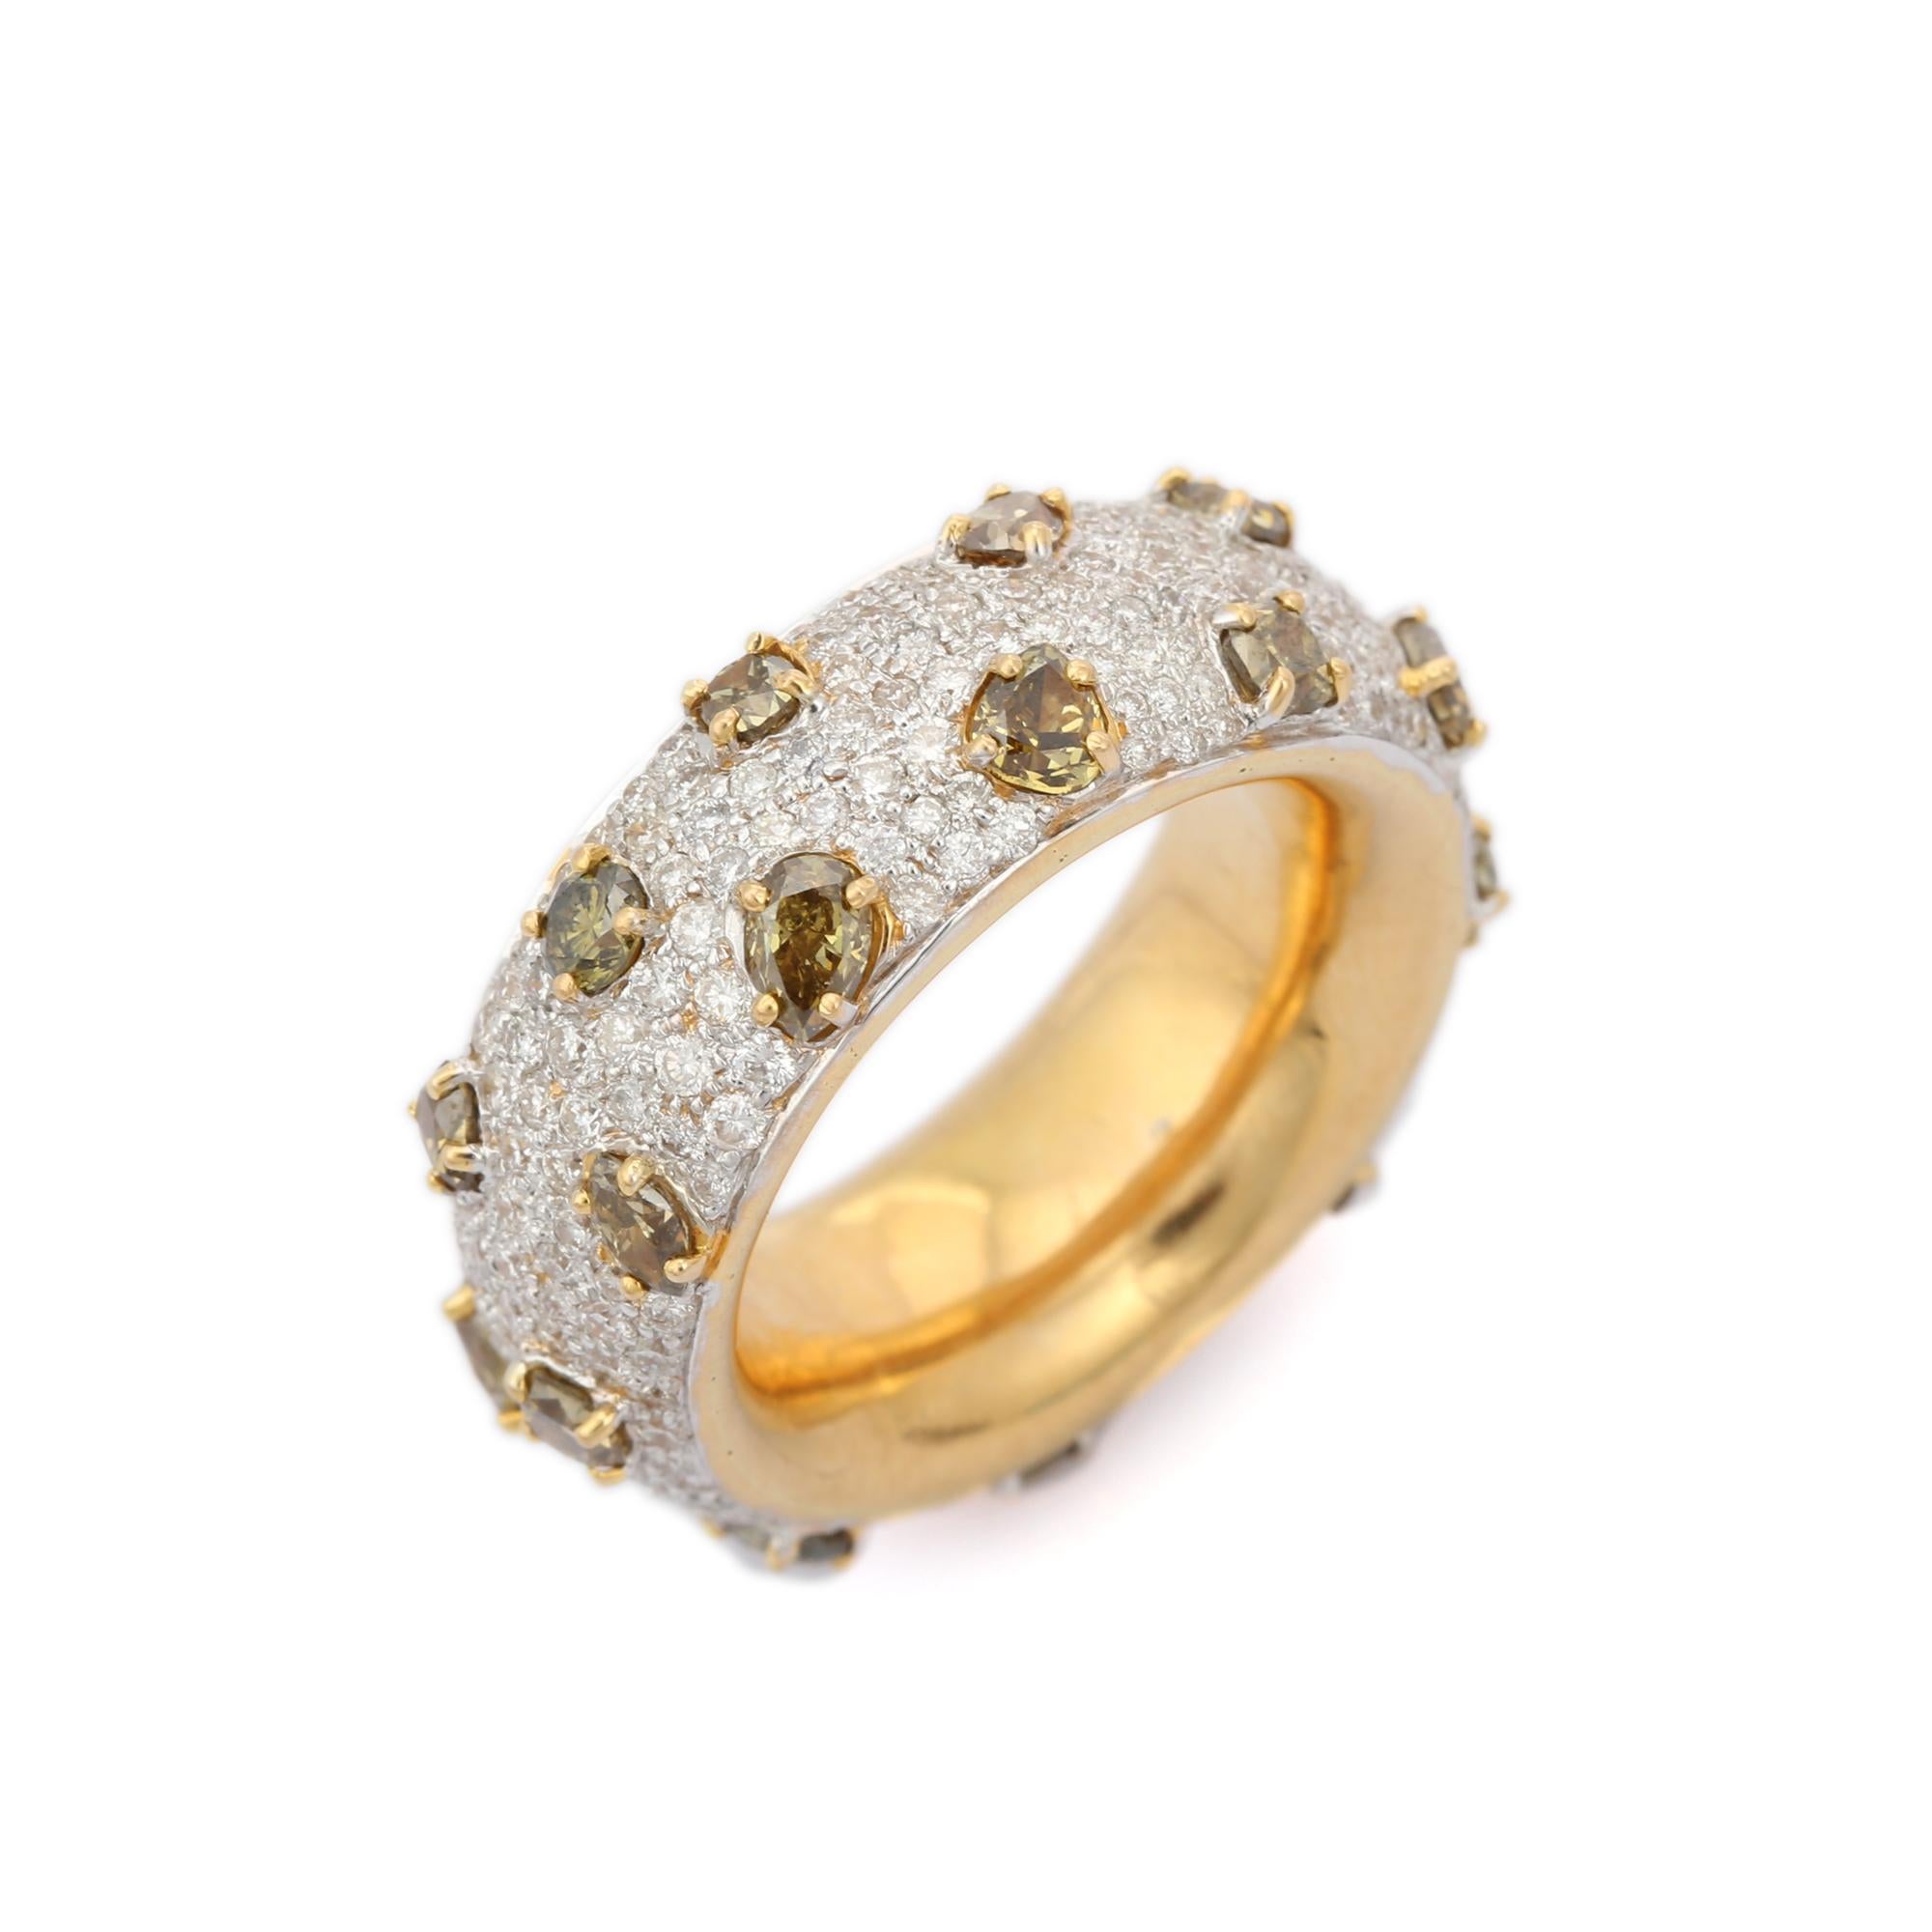 For Sale:  18 Karat Solid Yellow Gold 6.3 Carats Diamond Wedding Band Ring 5